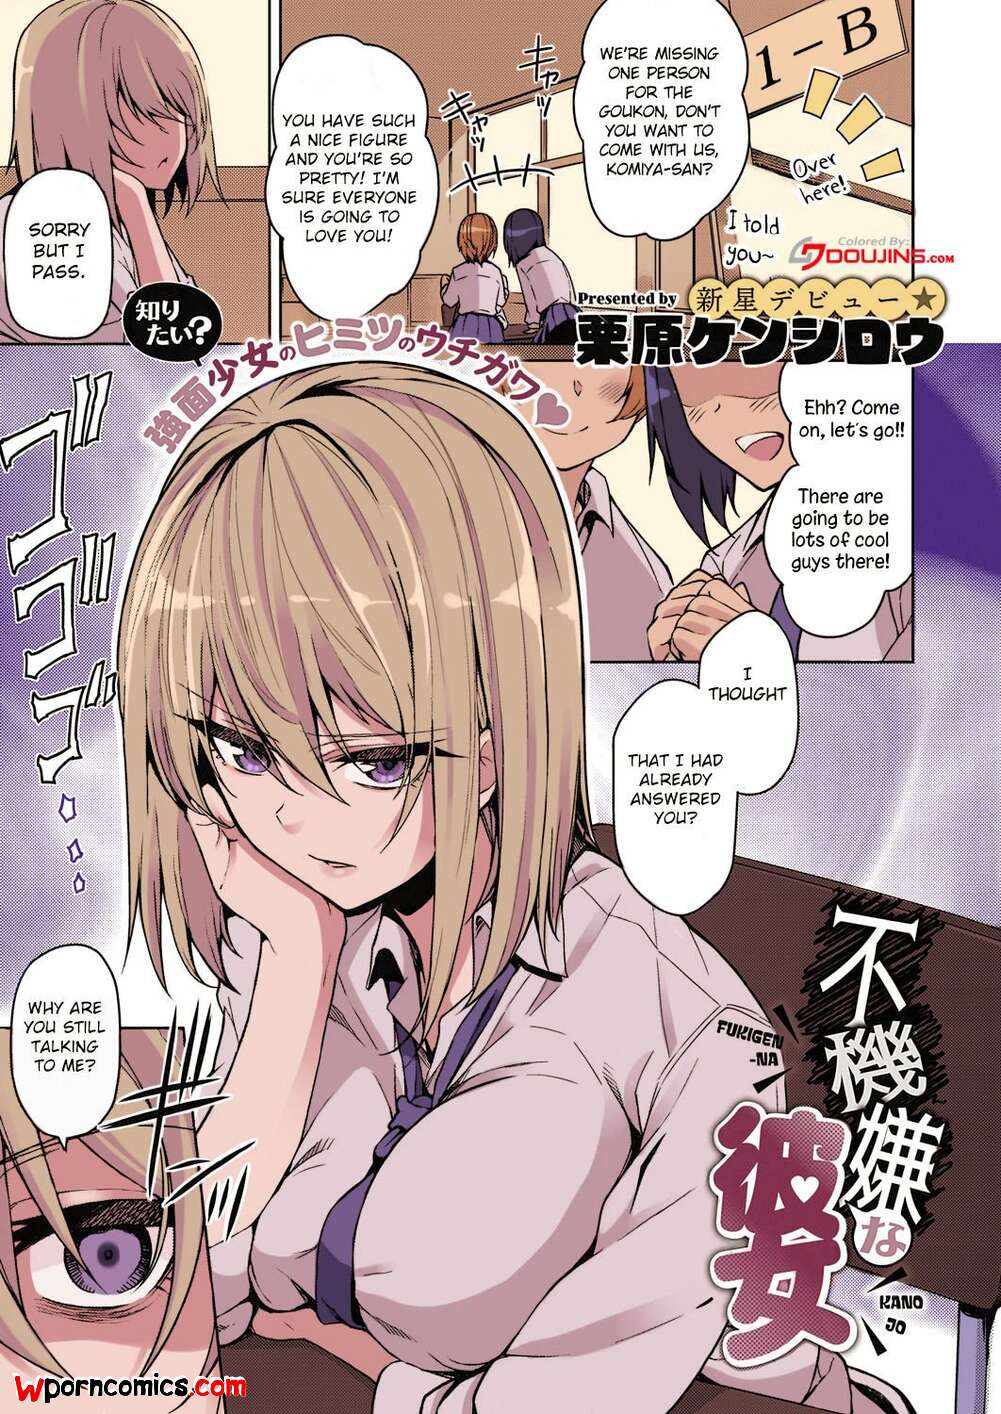 Anime manga porn comics